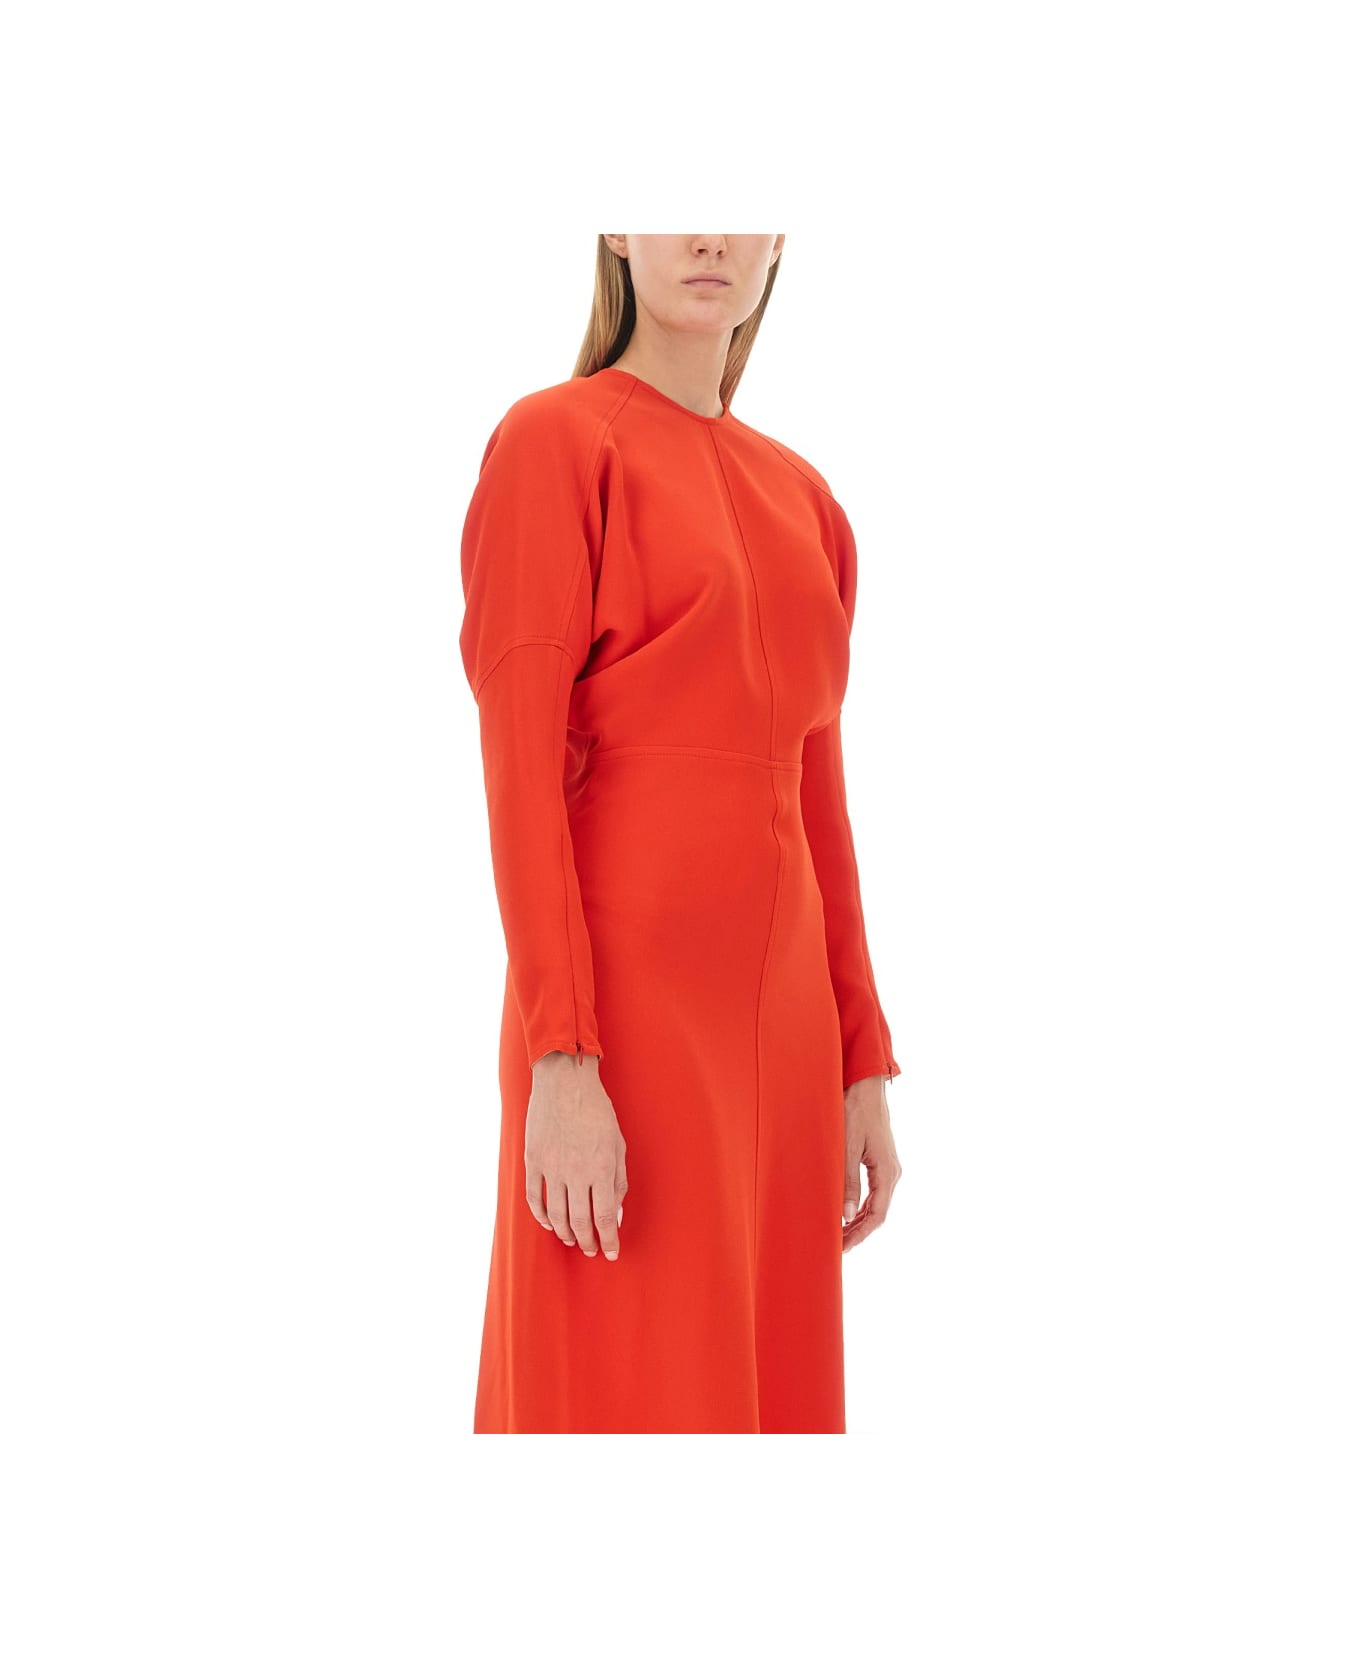 Victoria Beckham Dolman Midi Dress - RED